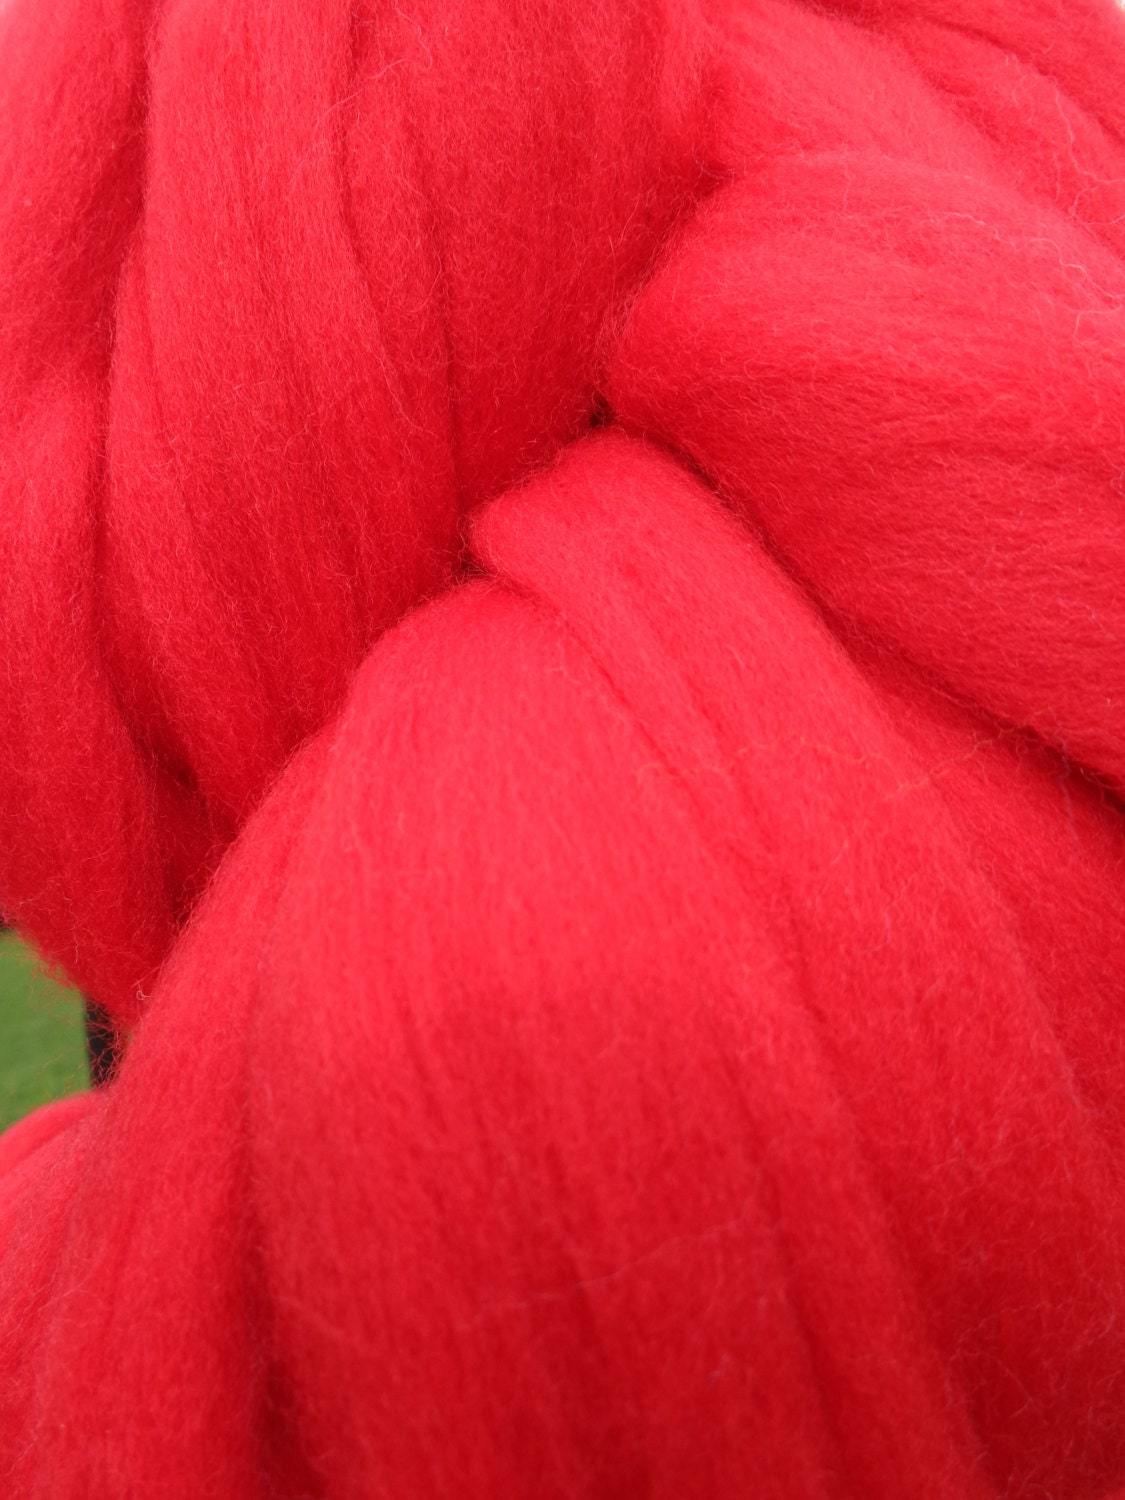 CrimsonCraft Red Wool Roving